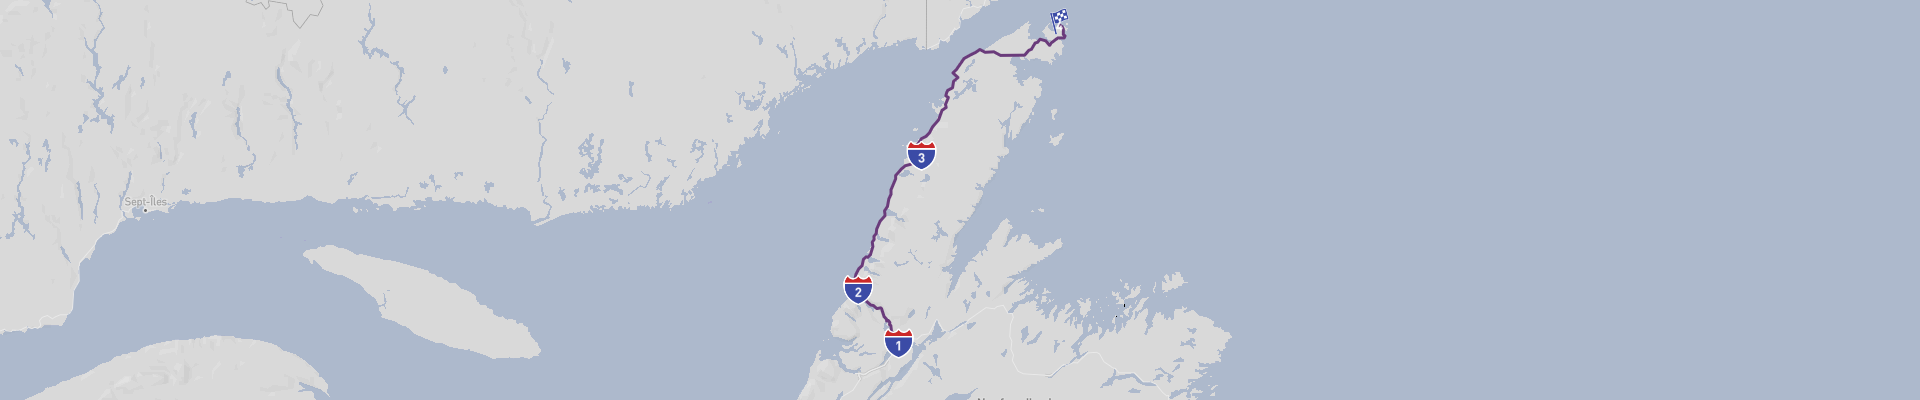 Newfoundland Viking Road Trip